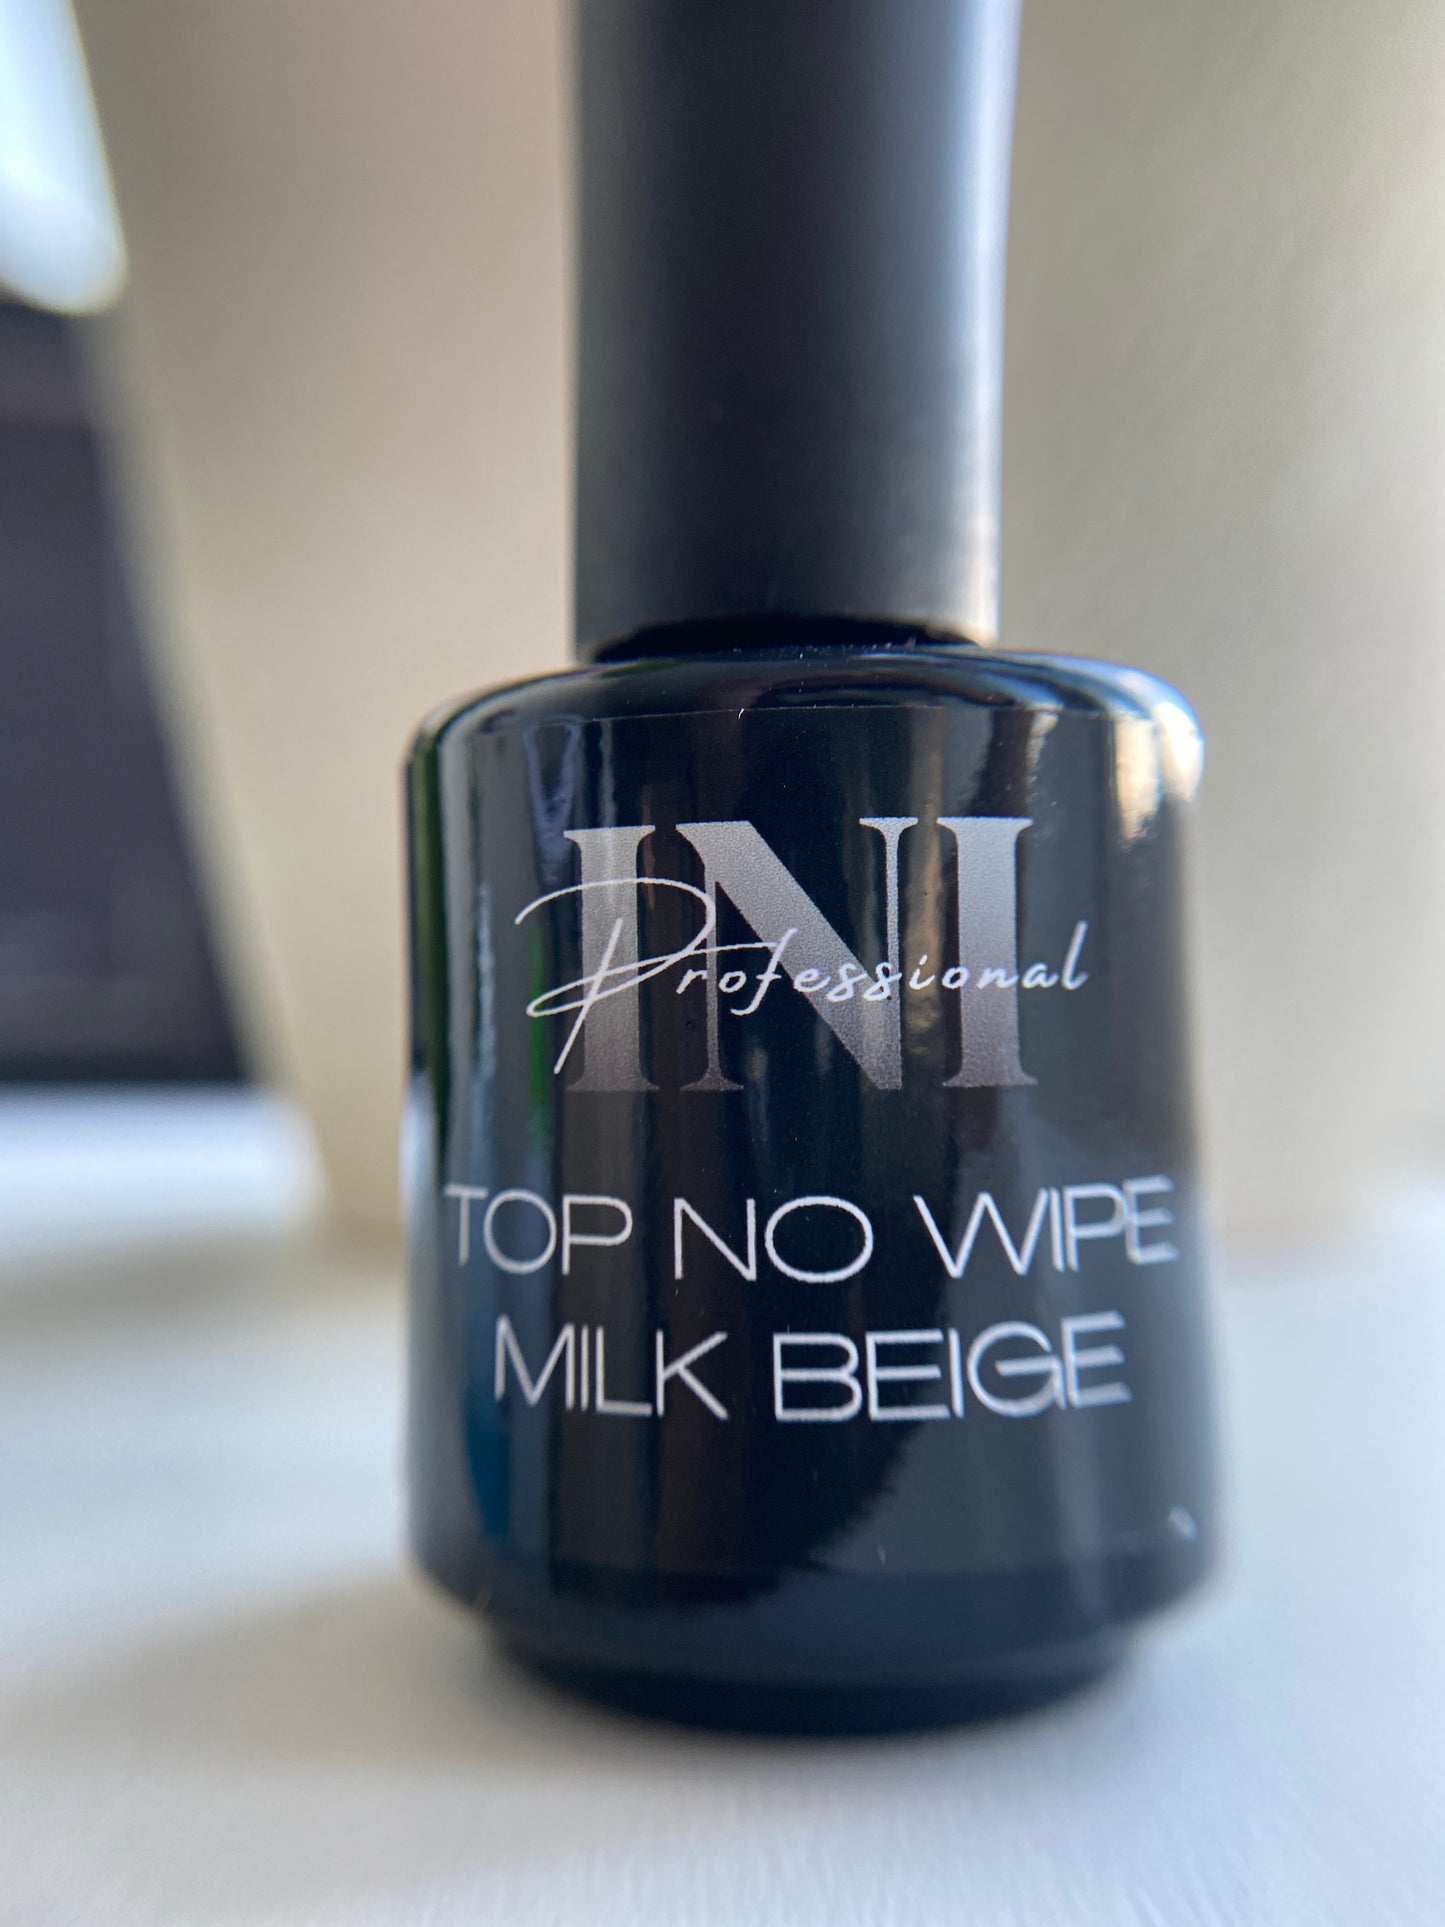 INI PROFESSIONAL - Top No Wipe Milk Beige, 15ml